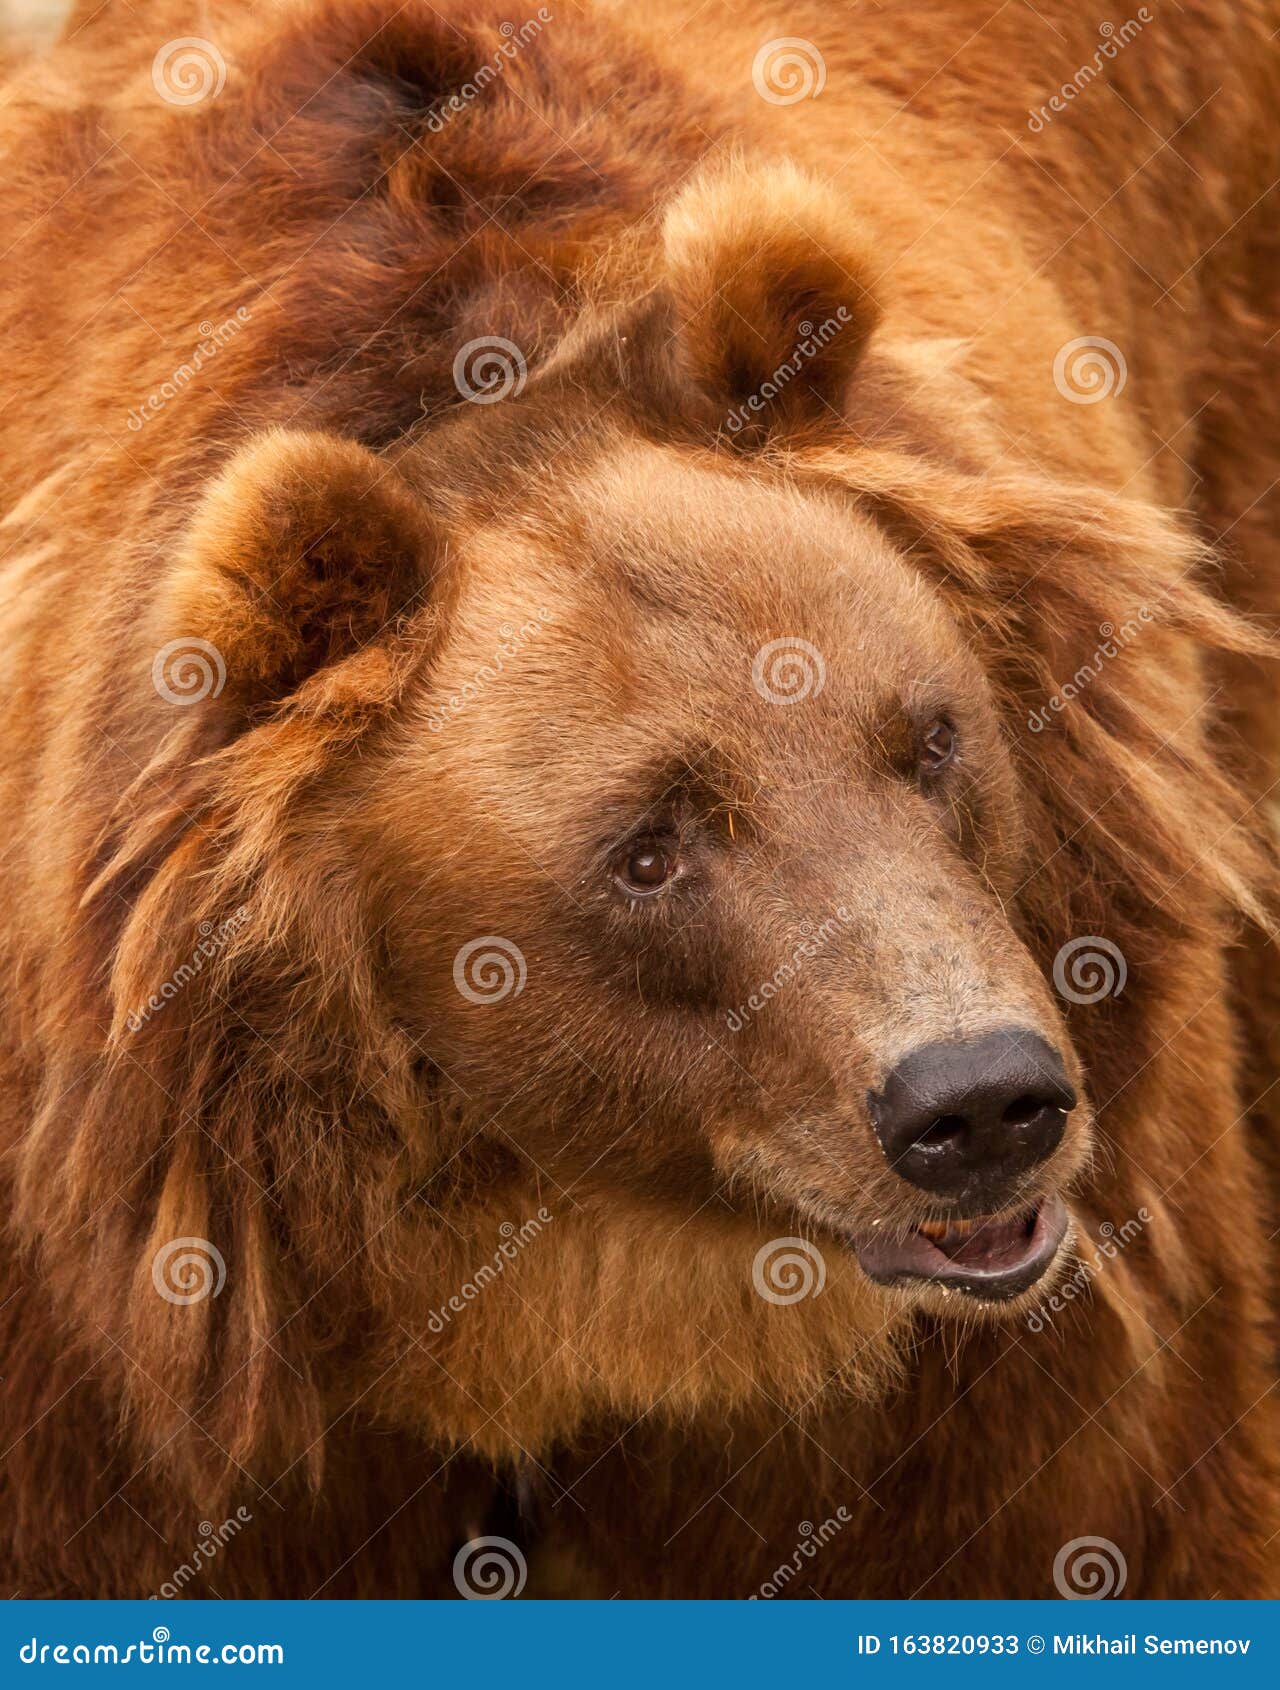 Big hairy bear